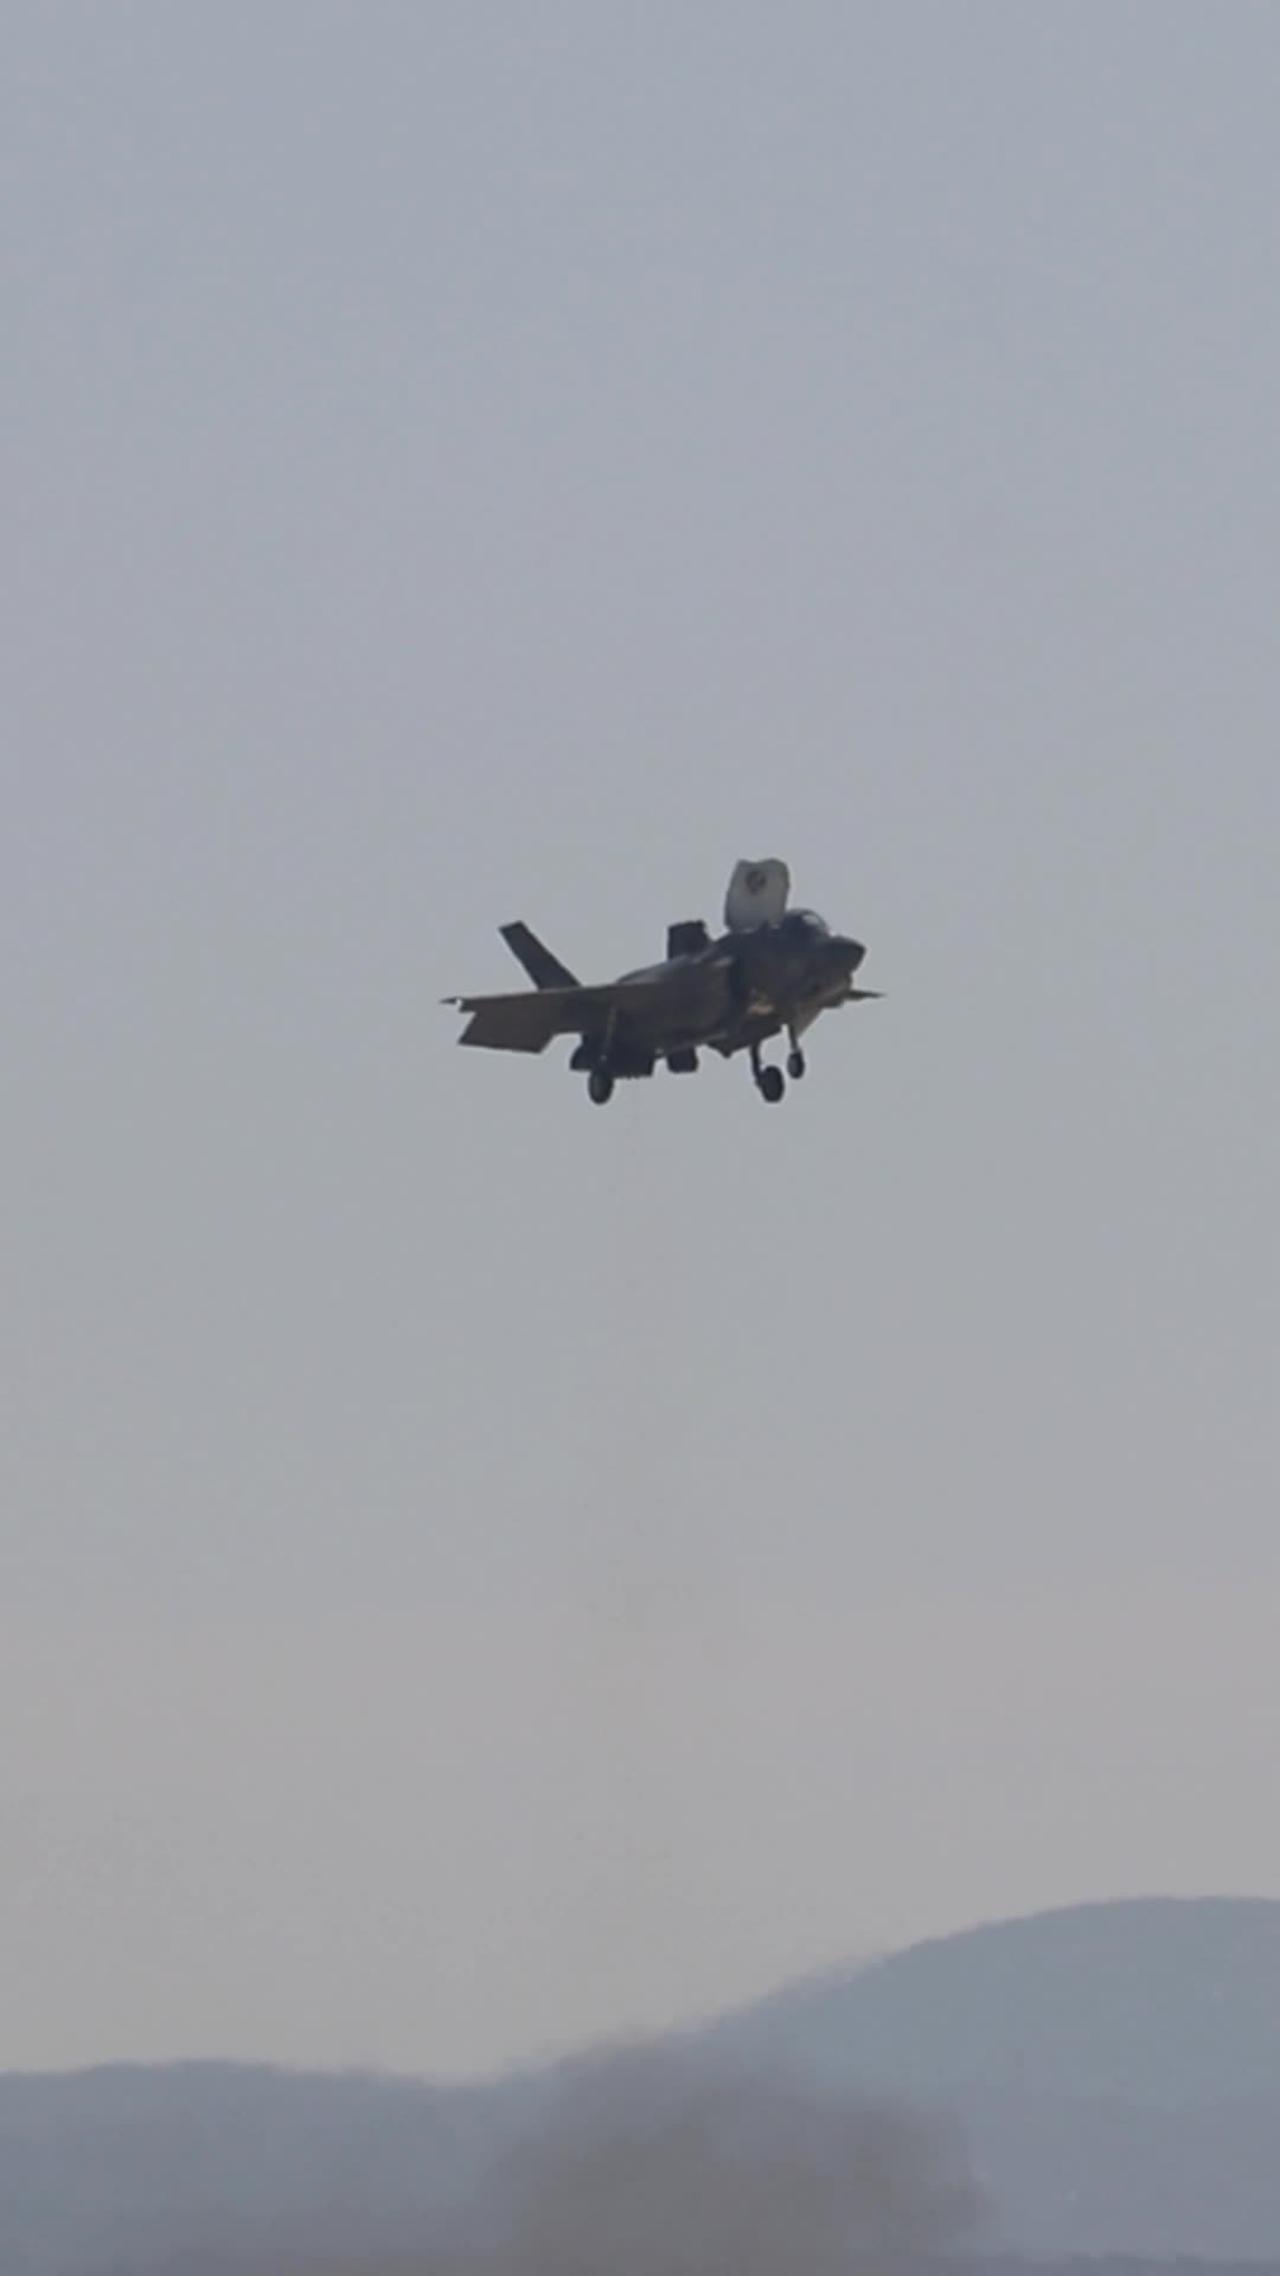 F35 landing in hover mode at MCAS Miramar